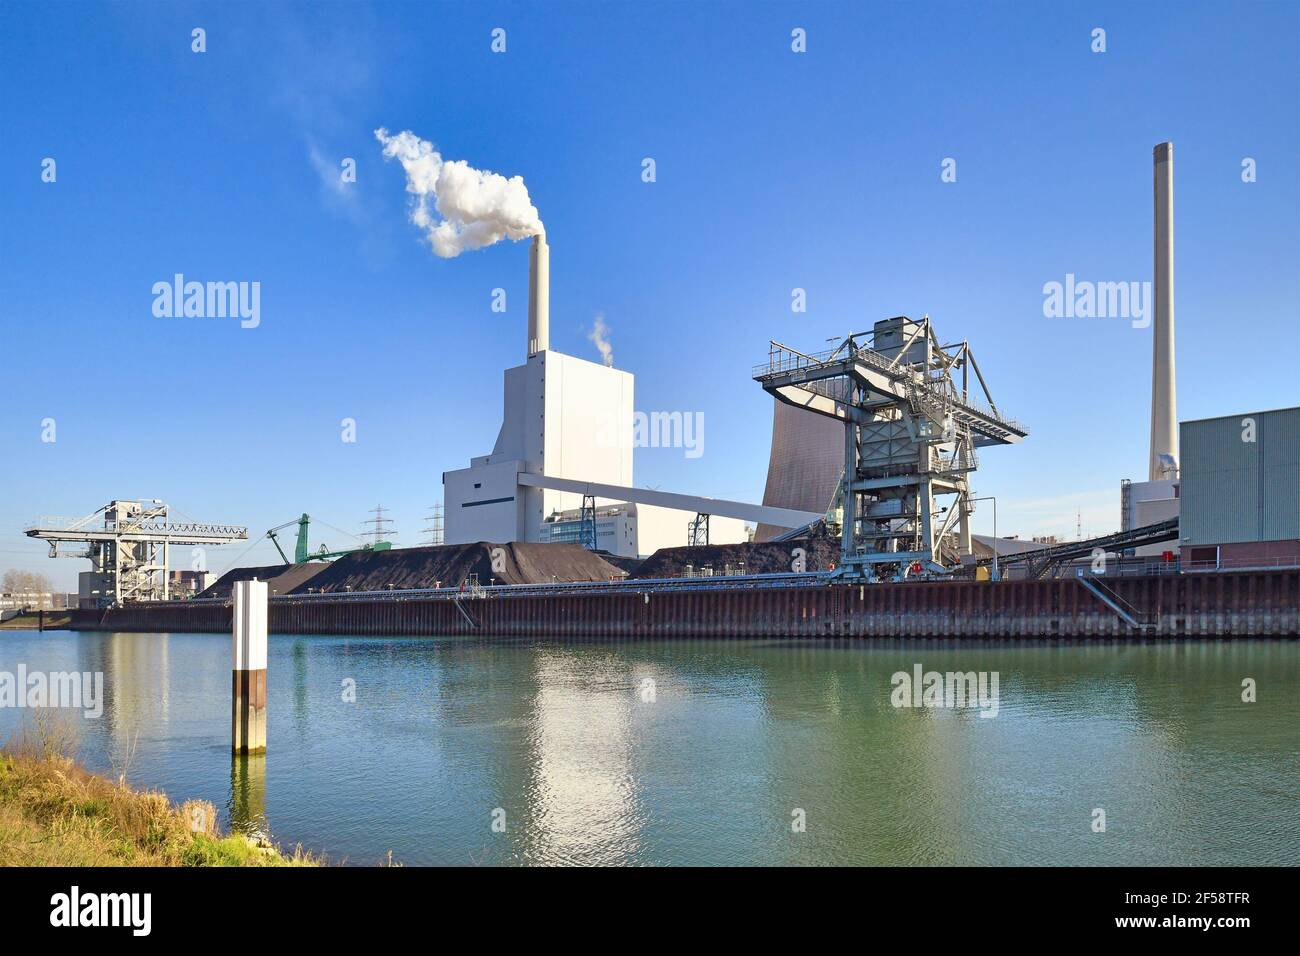 La centrale a vapore Rheinhafen di Karlsruhe, in Germania, utilizzava generazione di elettricità e teleriscaldamento da carbone duro Foto Stock